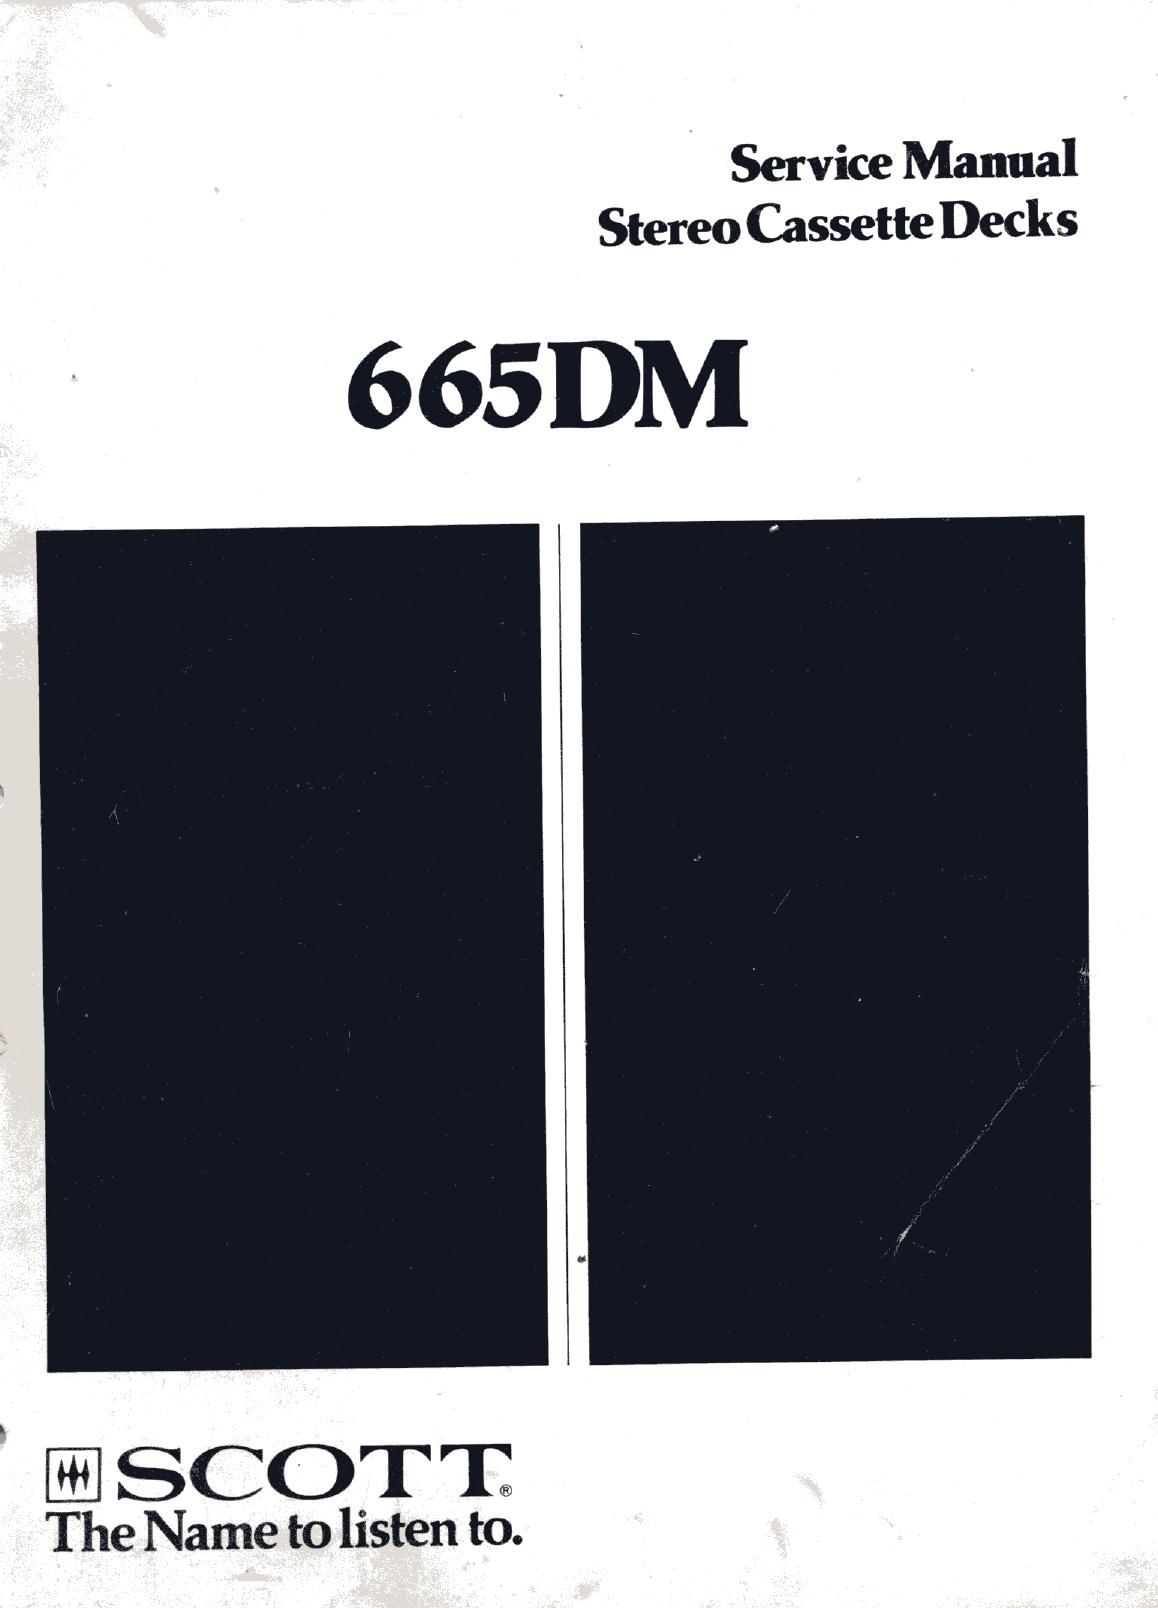 Scott 665 DM Service Manual